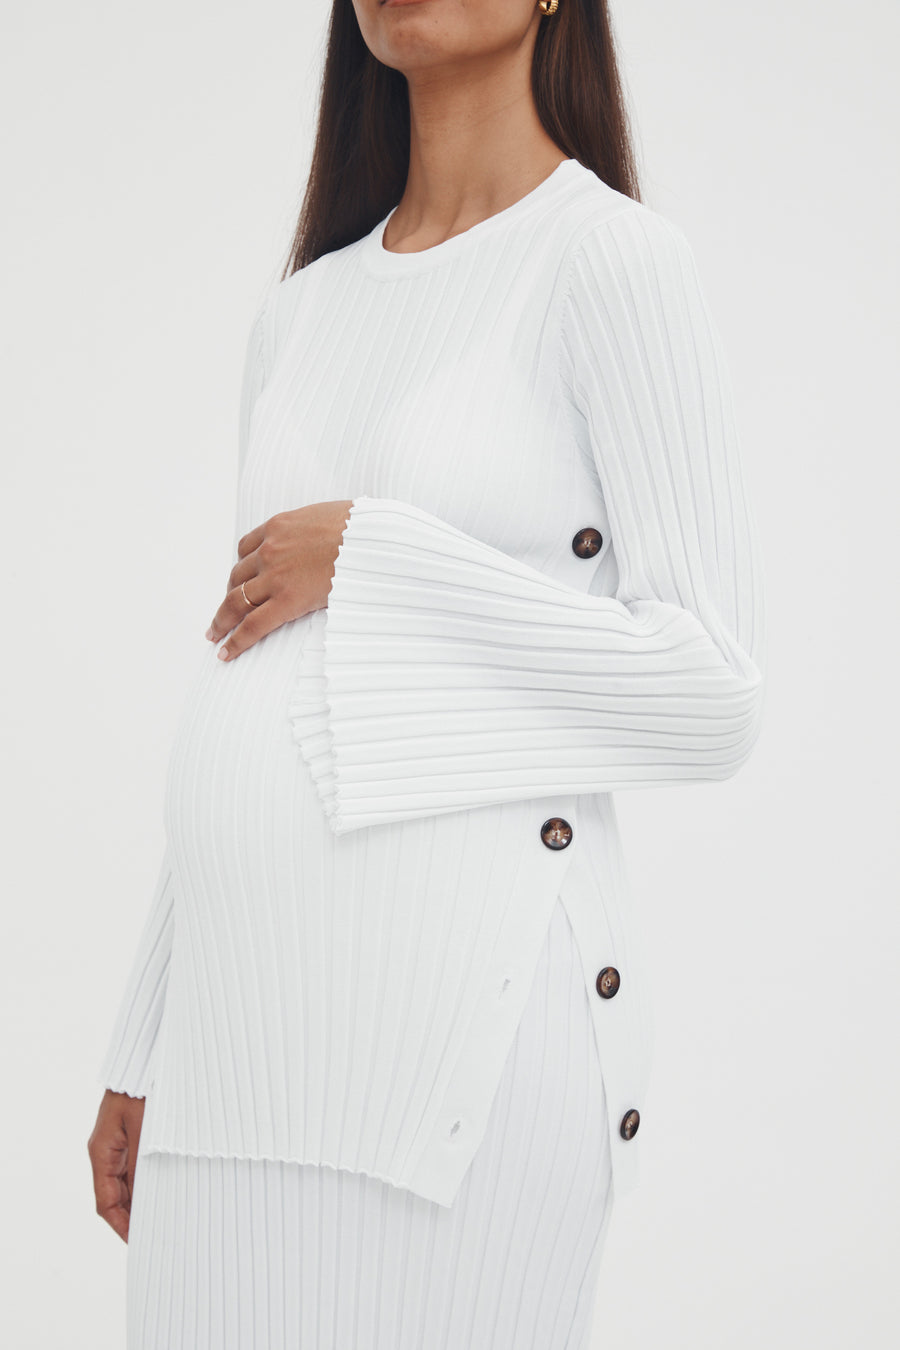 Luxury Maternity Top (White) 5